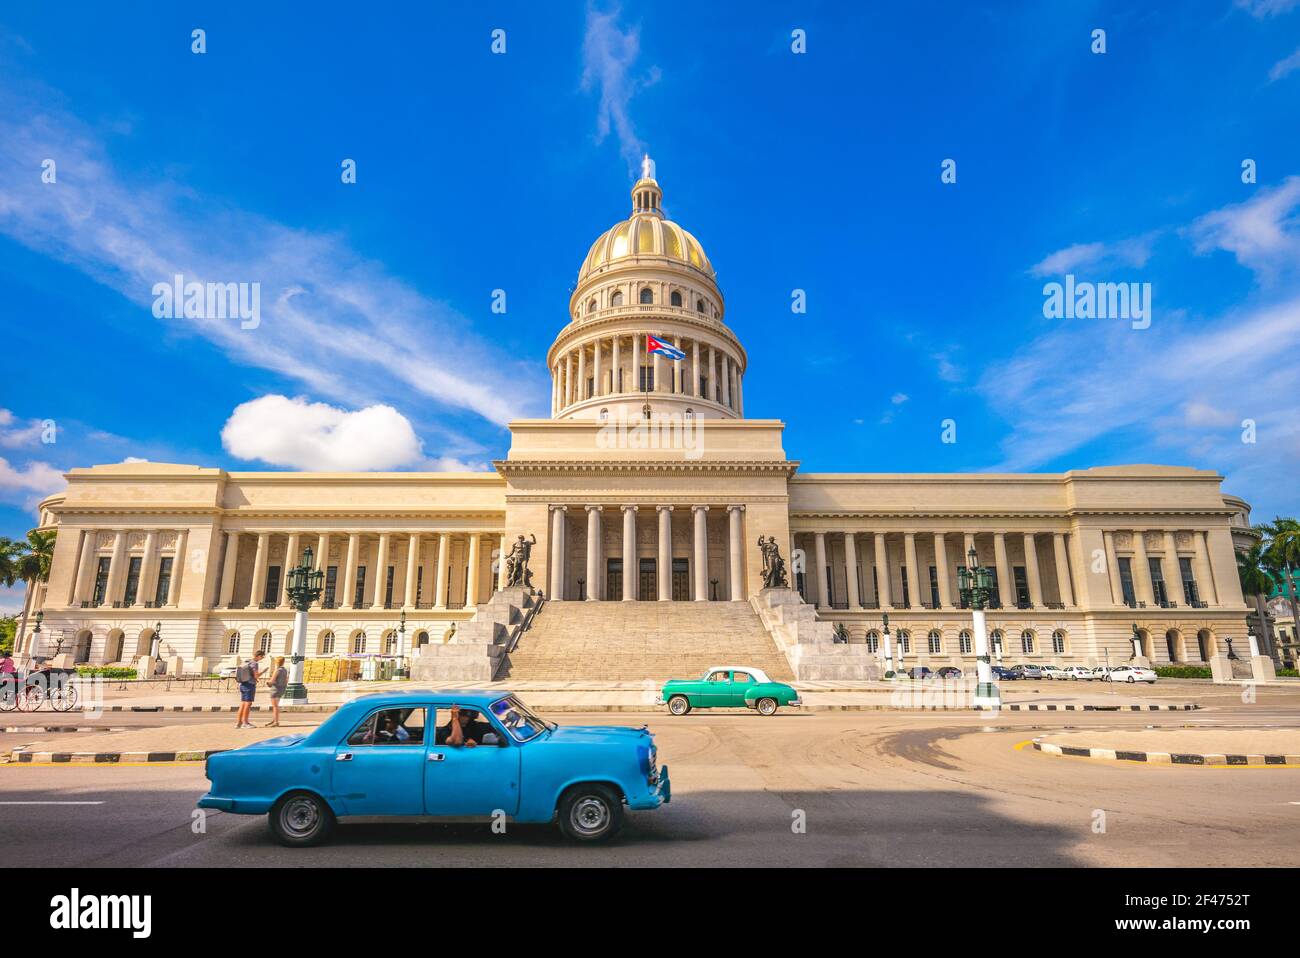 Nationale Capitol Building und Vintage in Havanna, Kuba Stockfoto